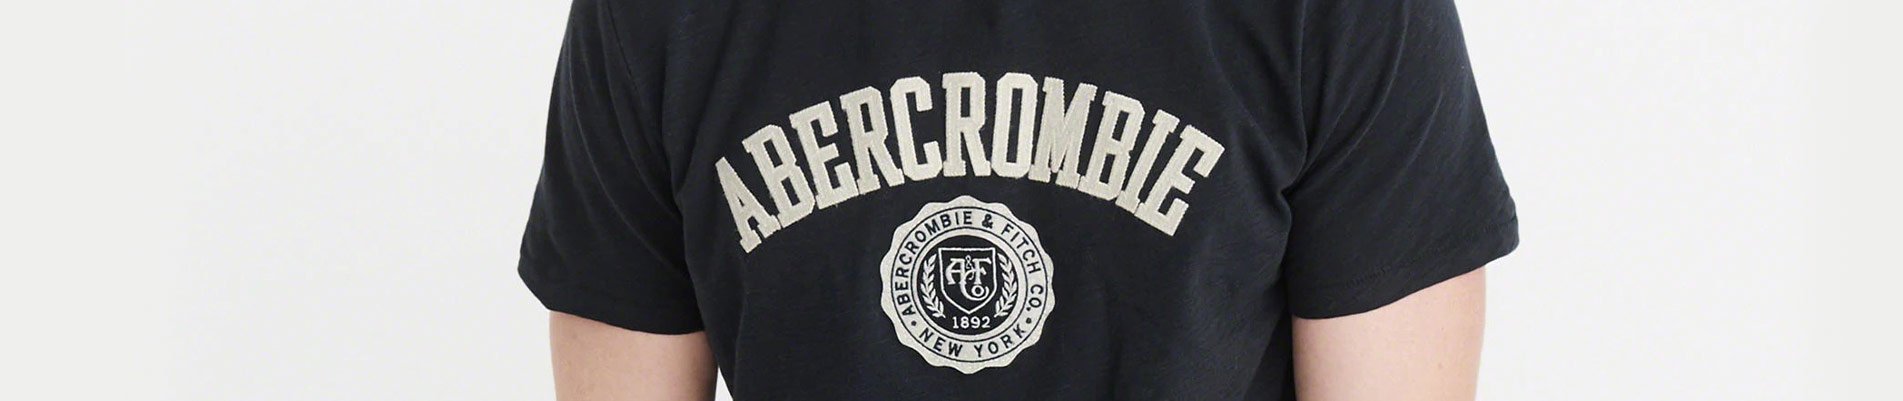 background-camiseta-abercrombie